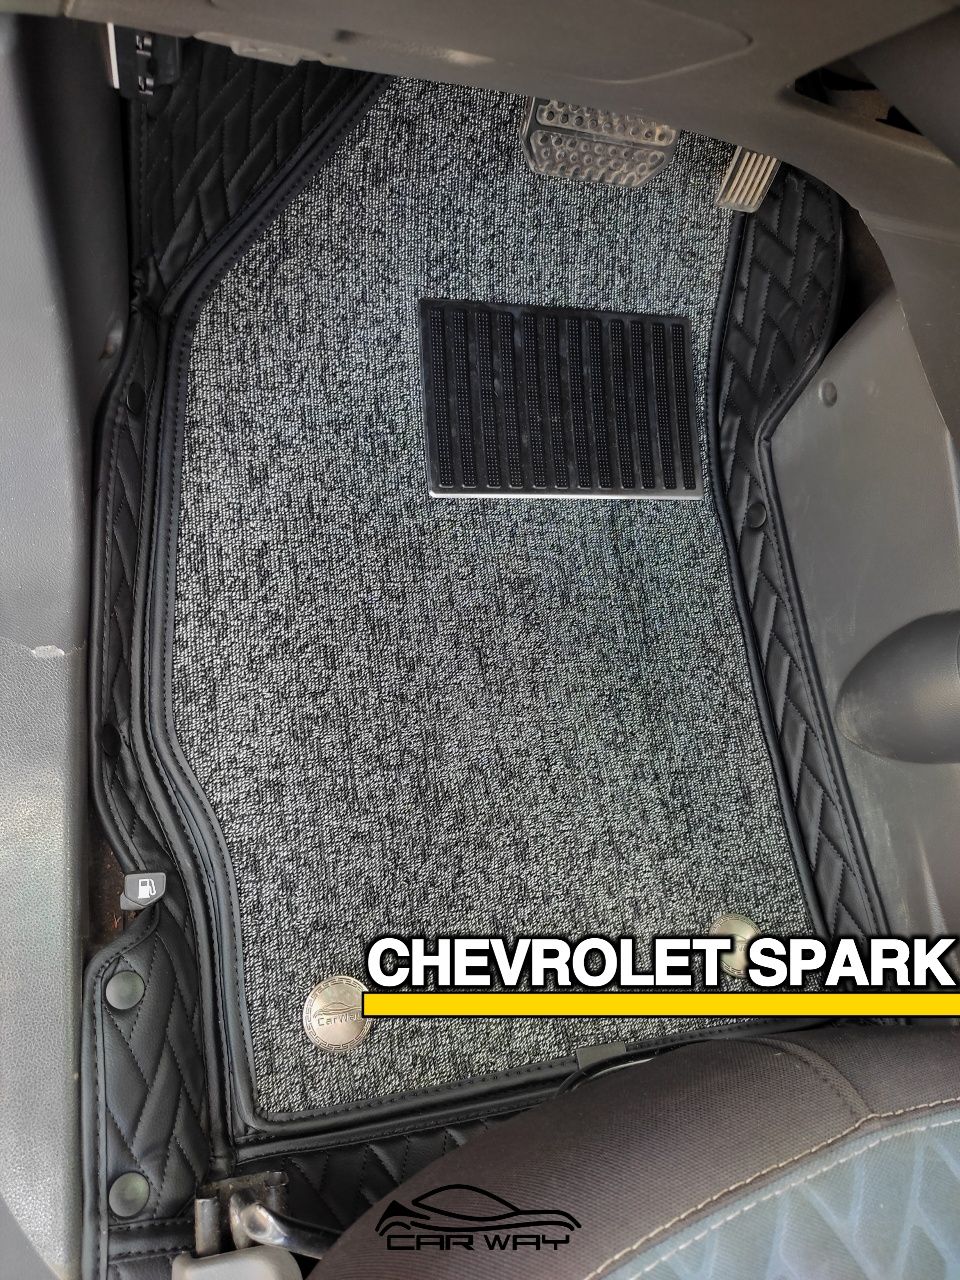 9D polik / коврики для Chevrolet Spark